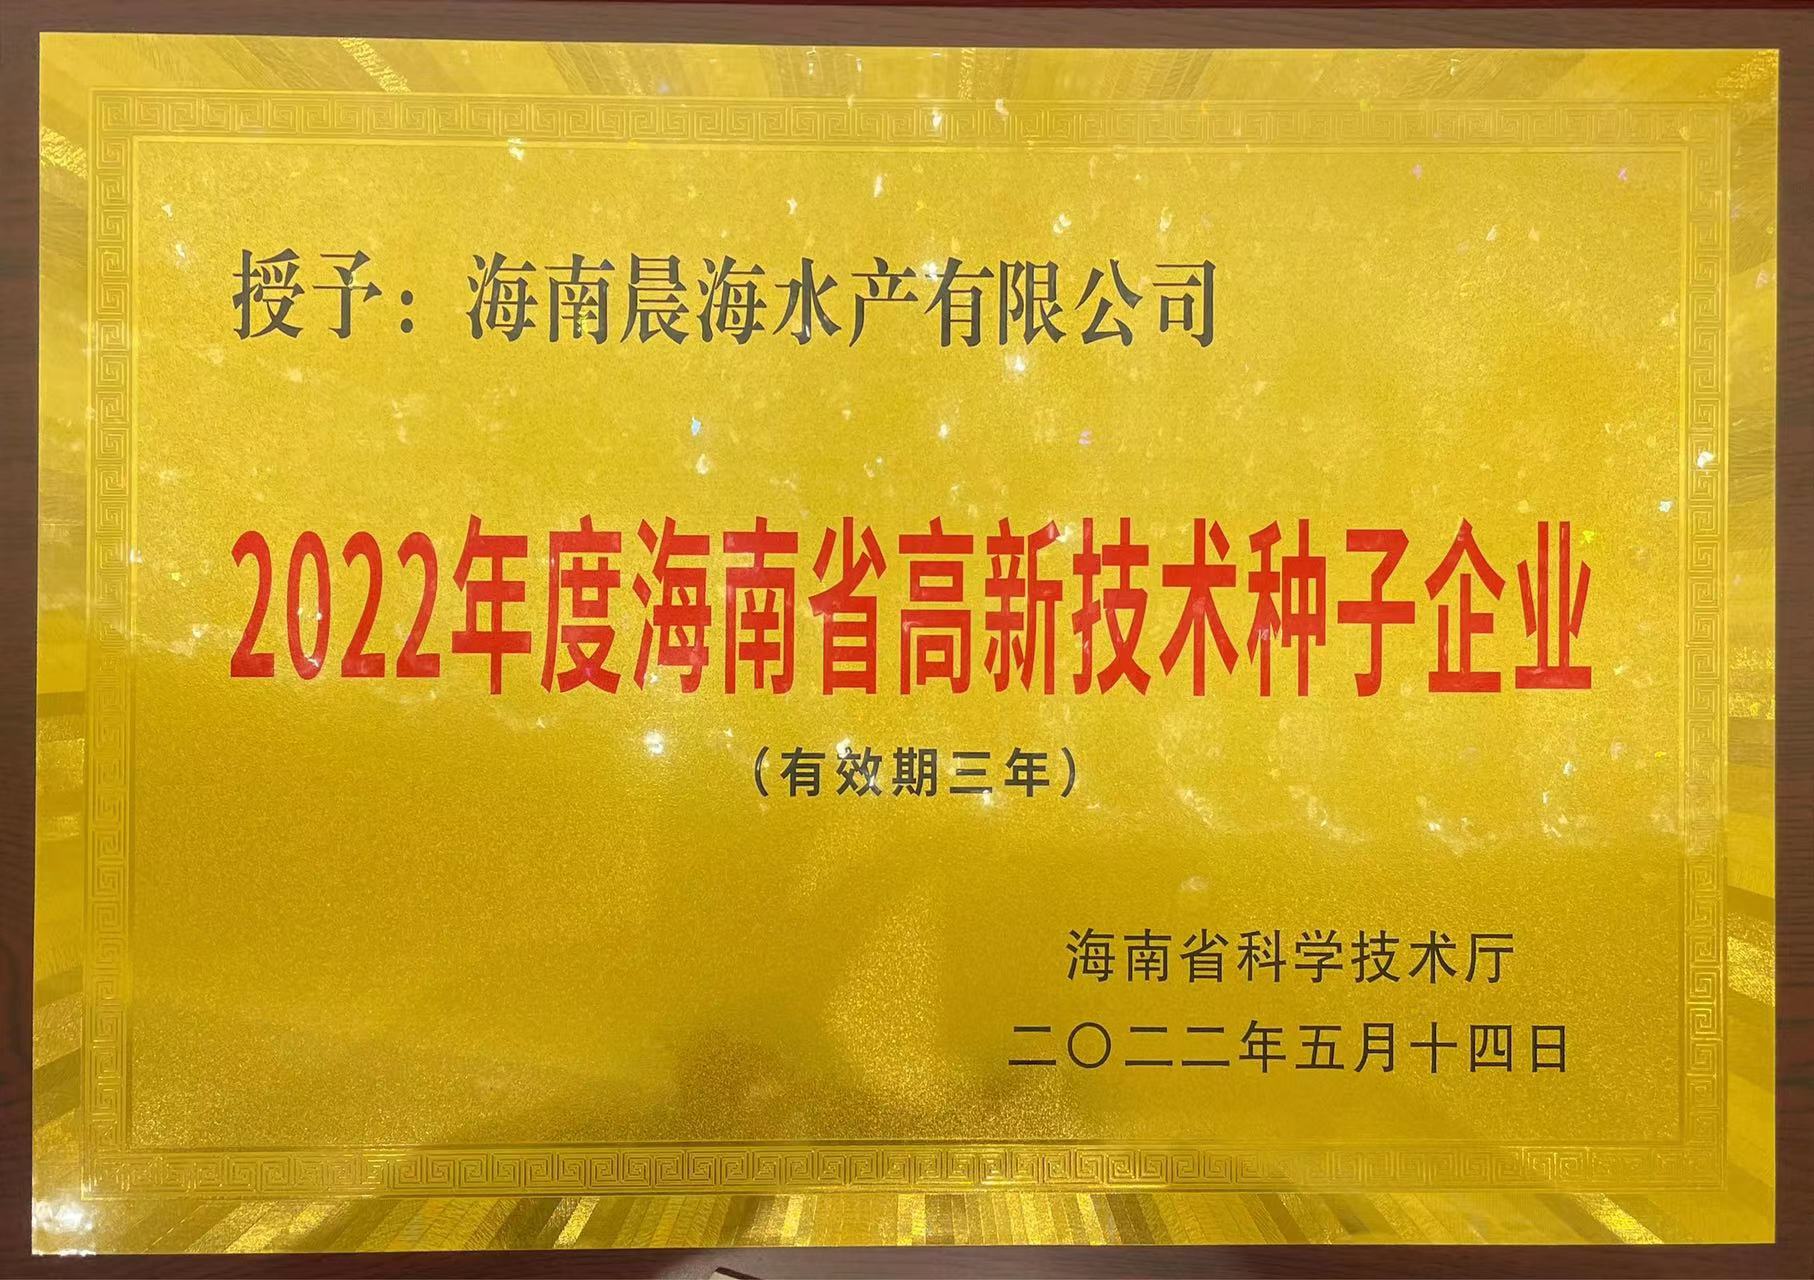 bwin国际荣获“海南省高新技术种子企业”称号